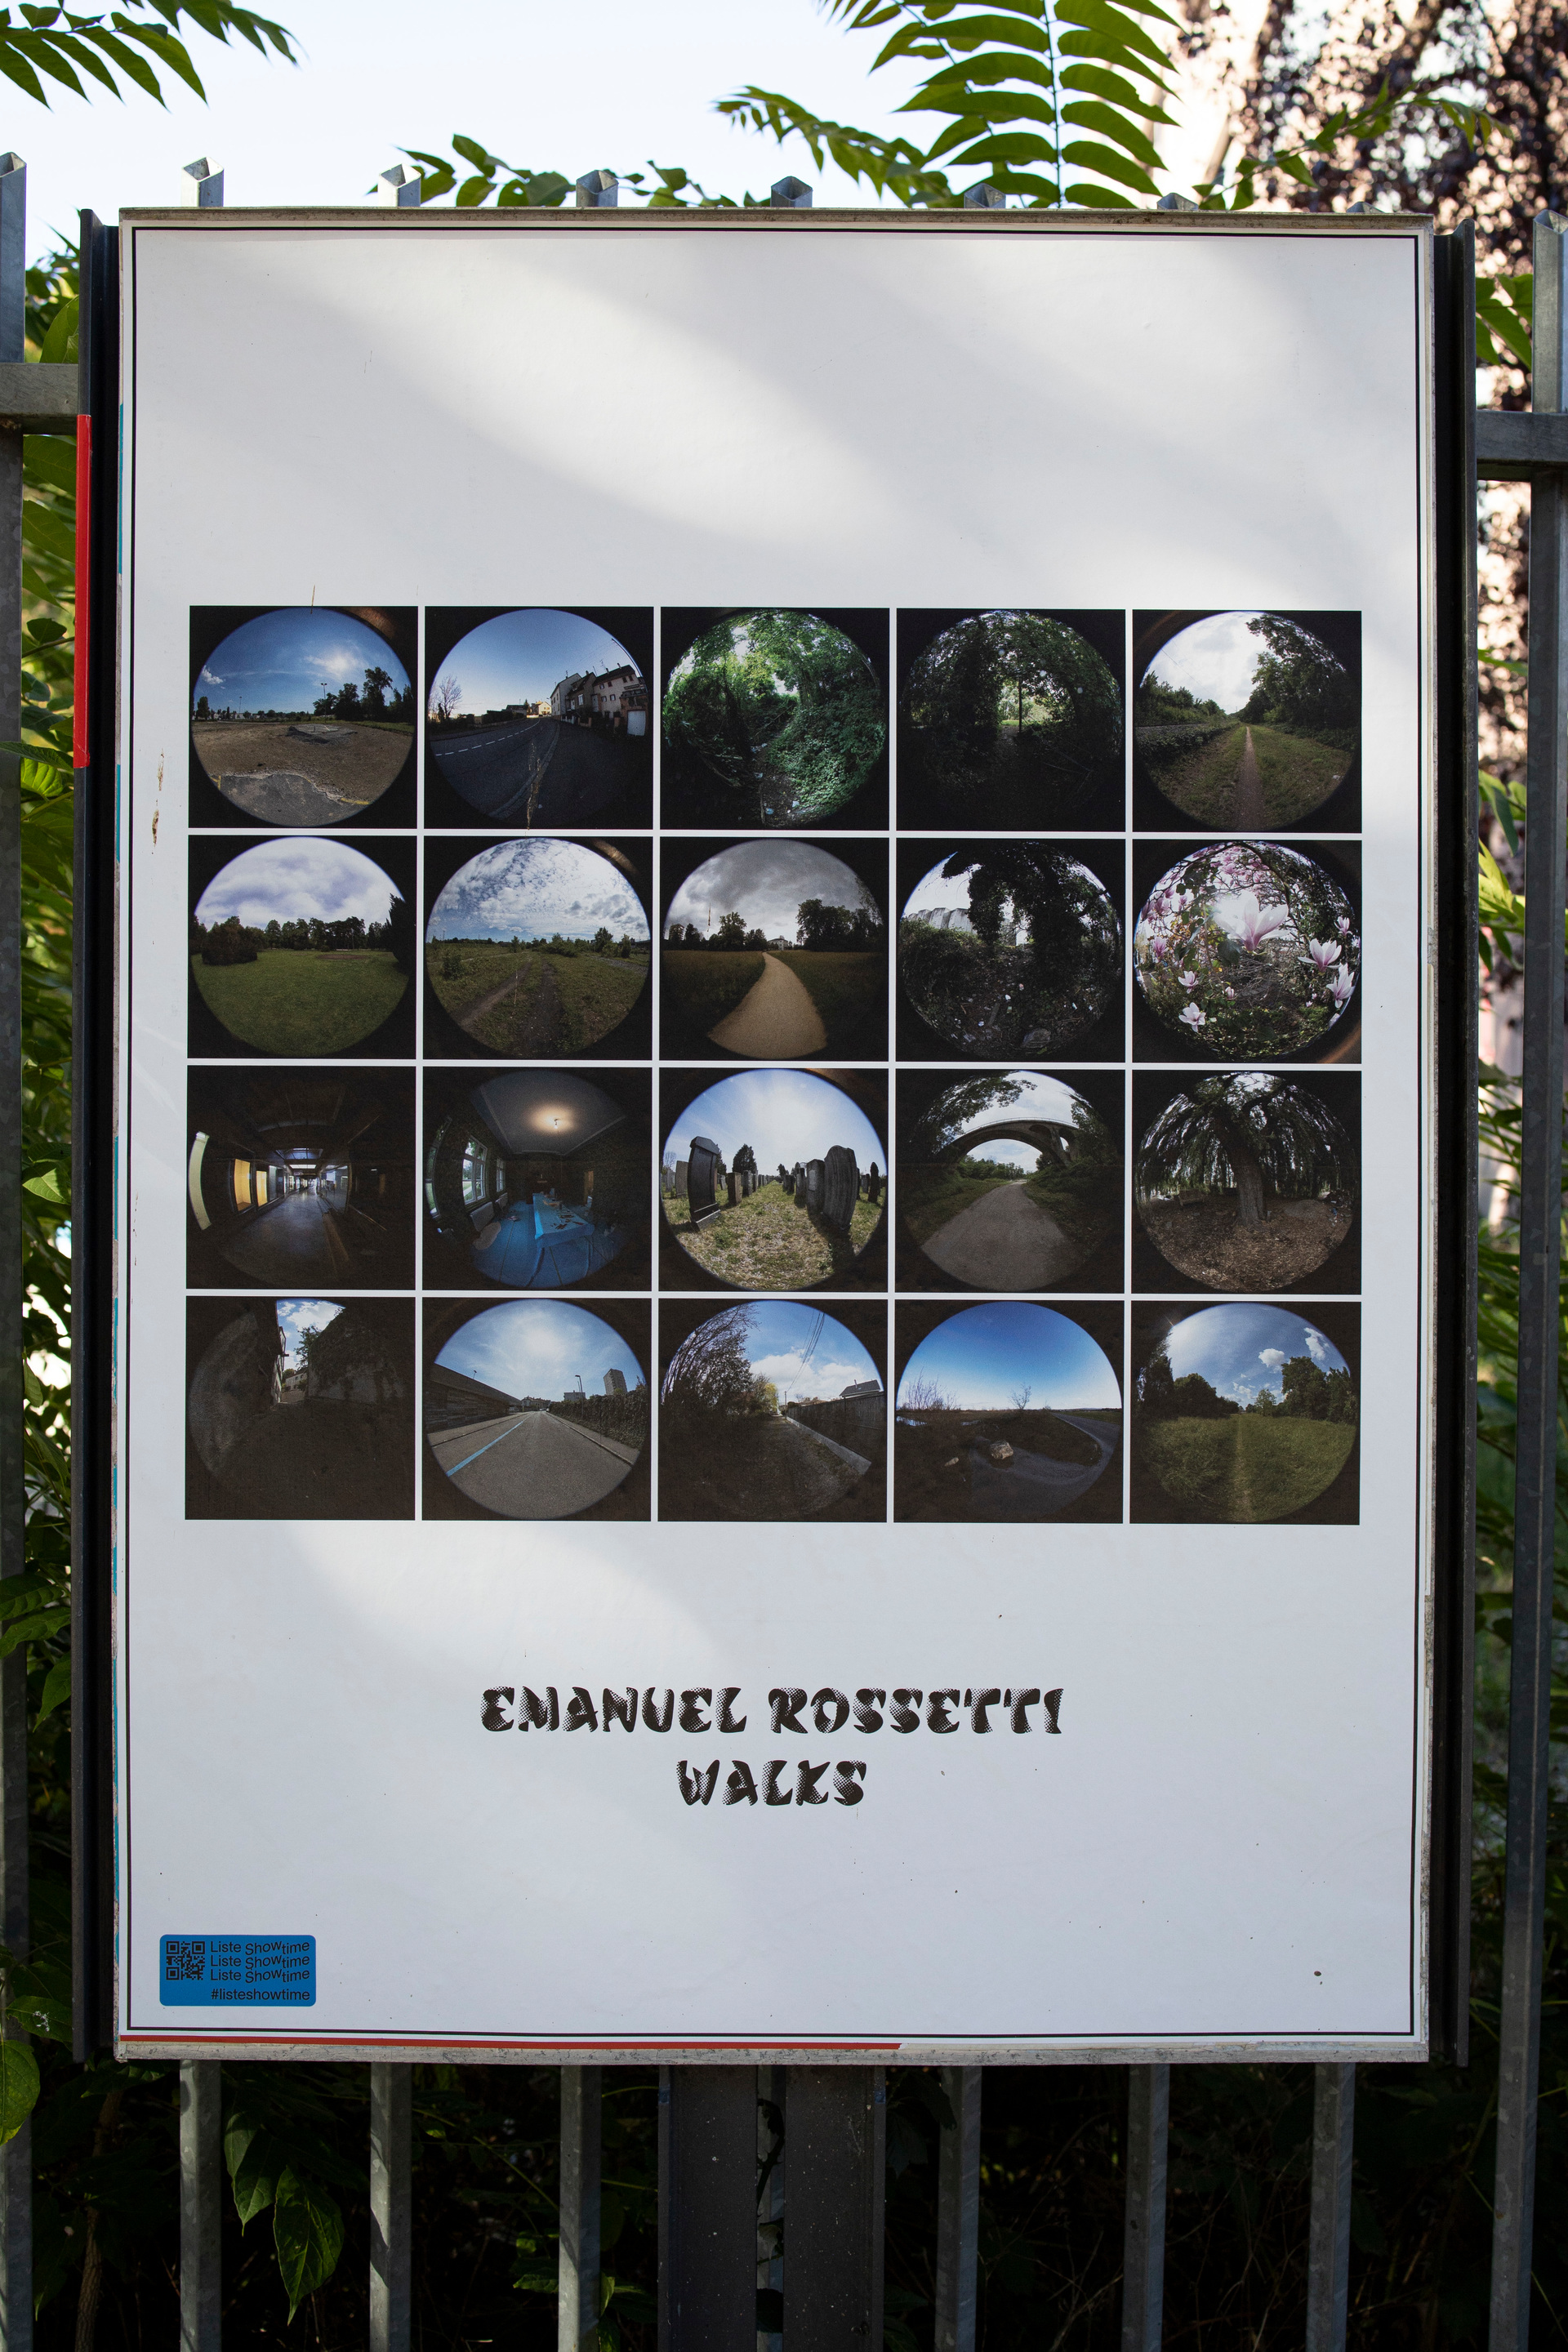 Emanuel Rossetti, “Walks”, 2020
Poster für LISTE Art Fair, Basel, September 2020
Photo Credit & Courtesy: der Künstler